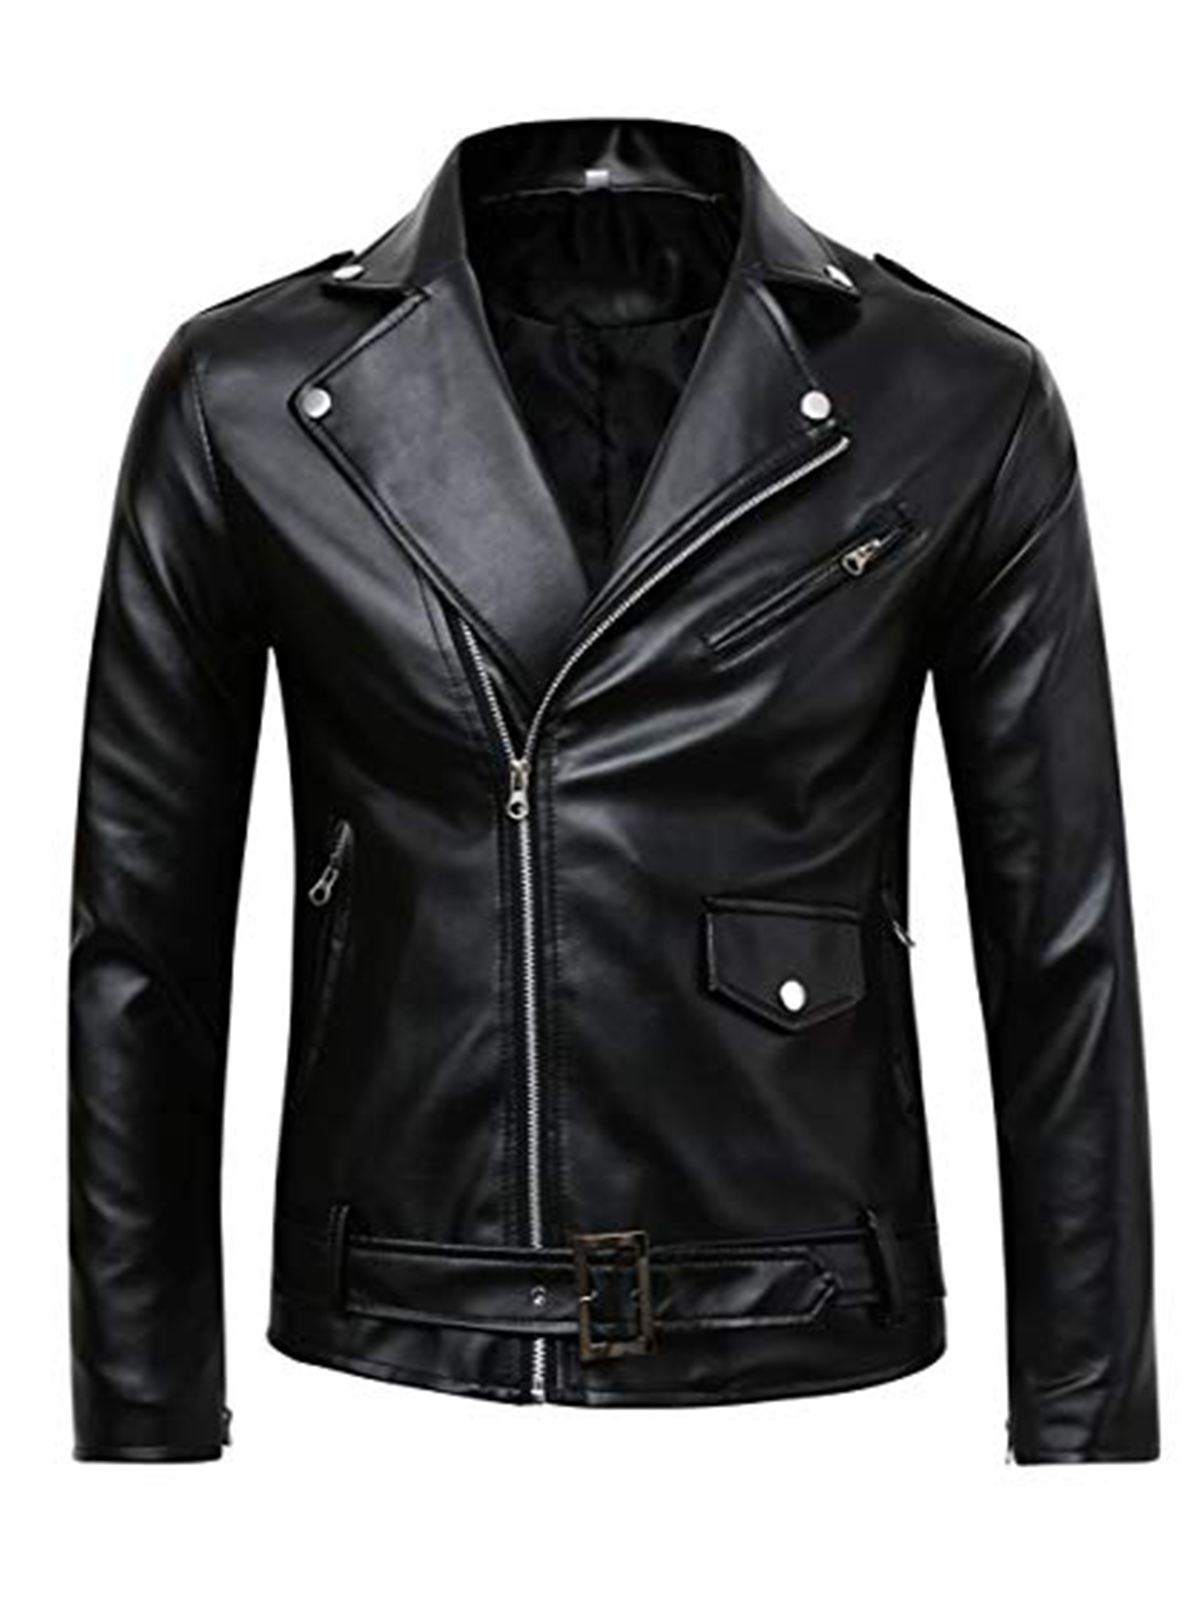 Men’s Classic Black Genuine Leather Motorcycle Jacket